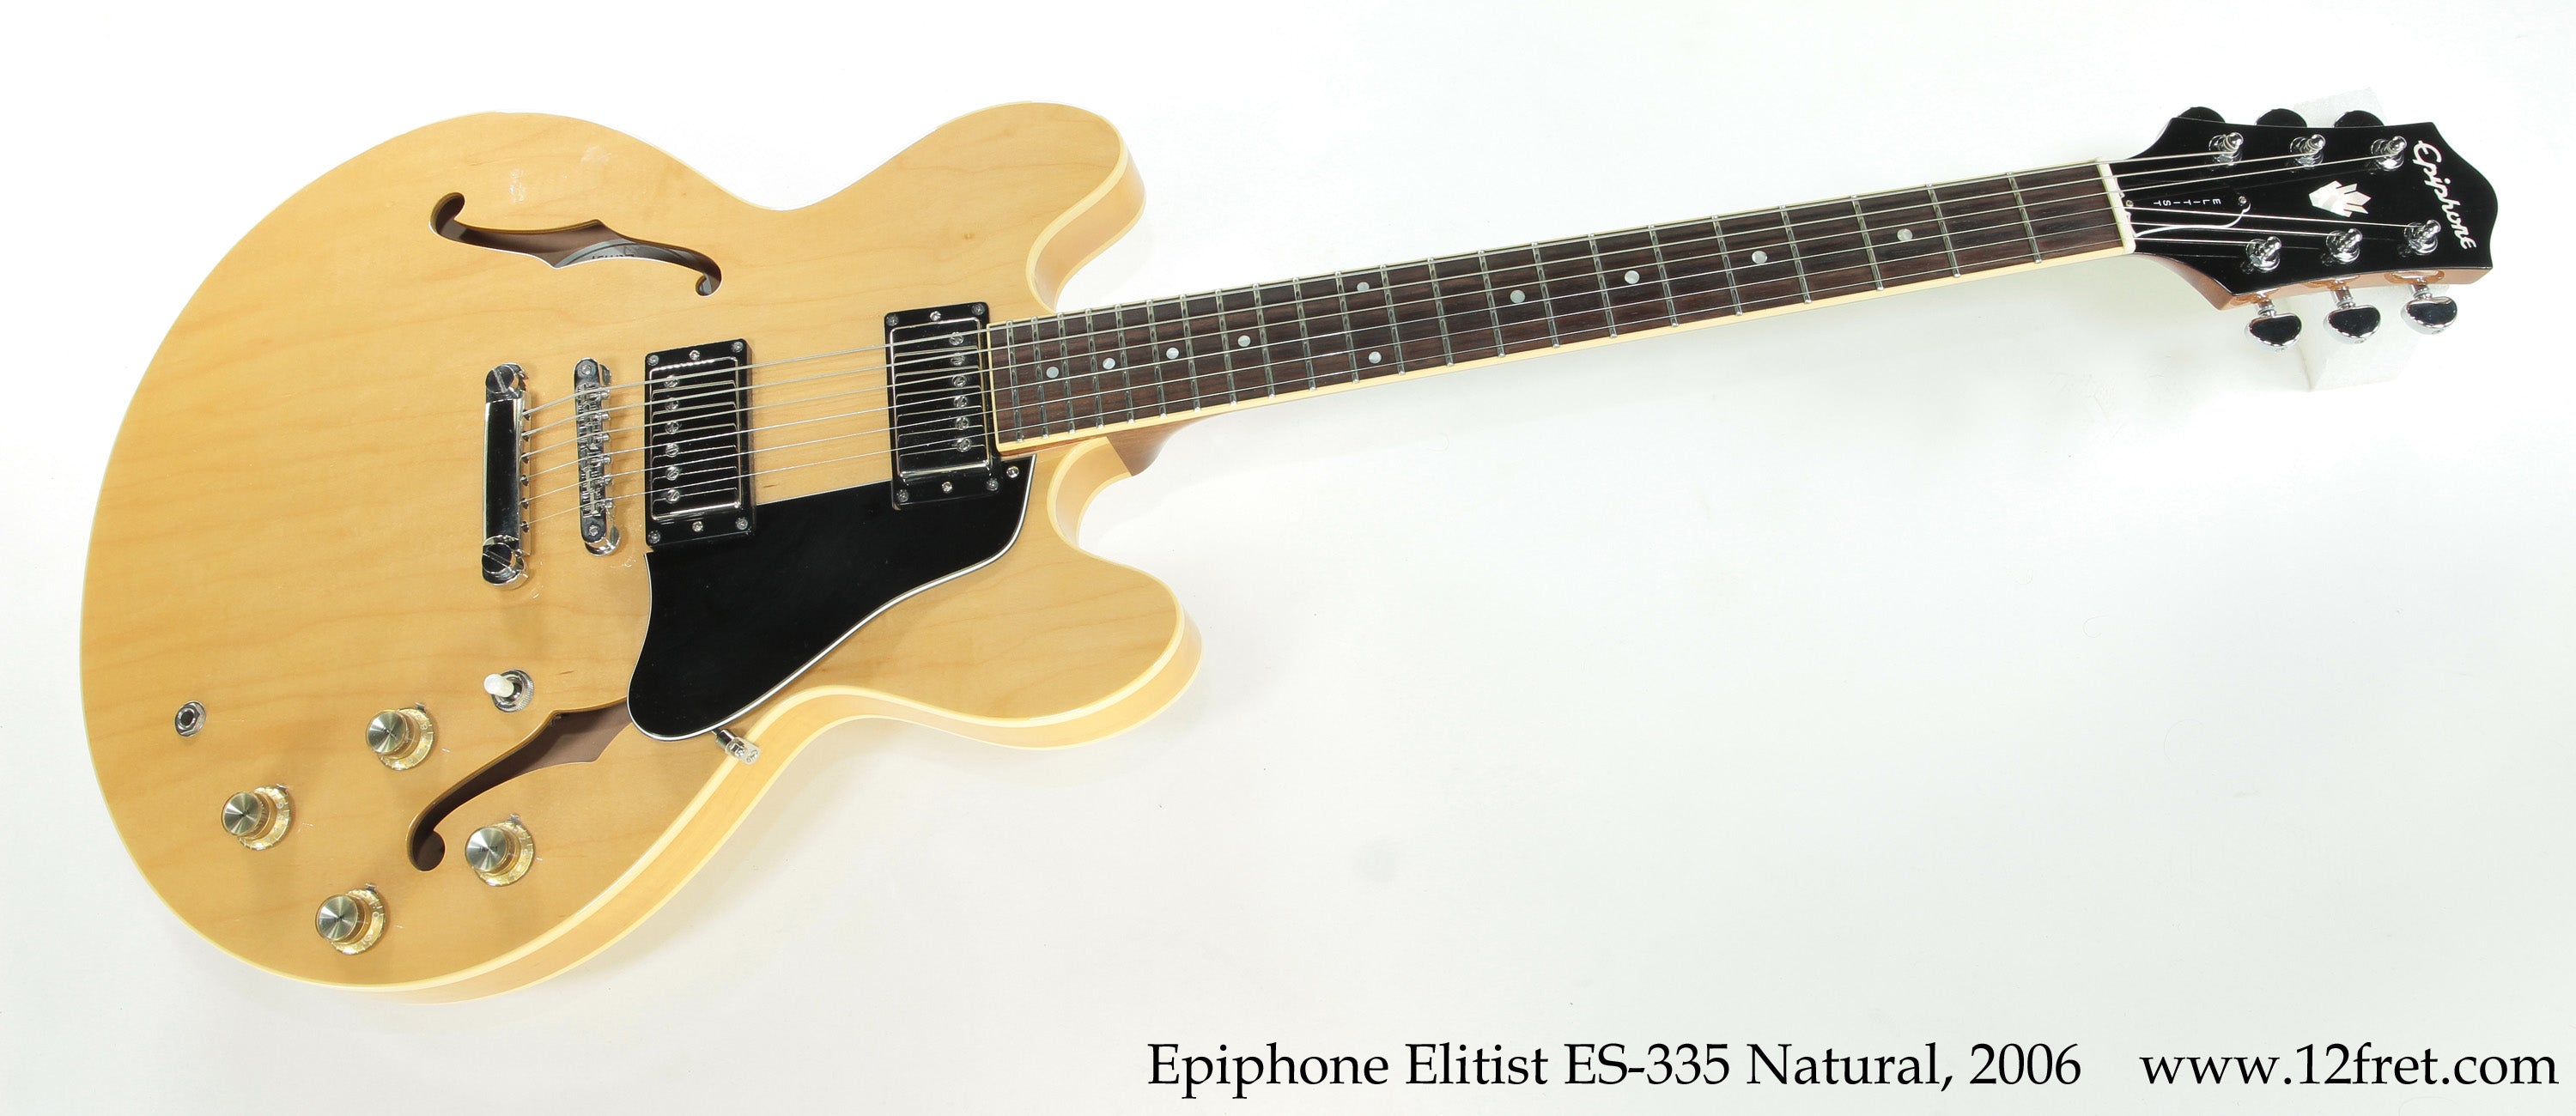 Epiphone Elitist ES-335 Natural, 2006 - The Twelfth Fret